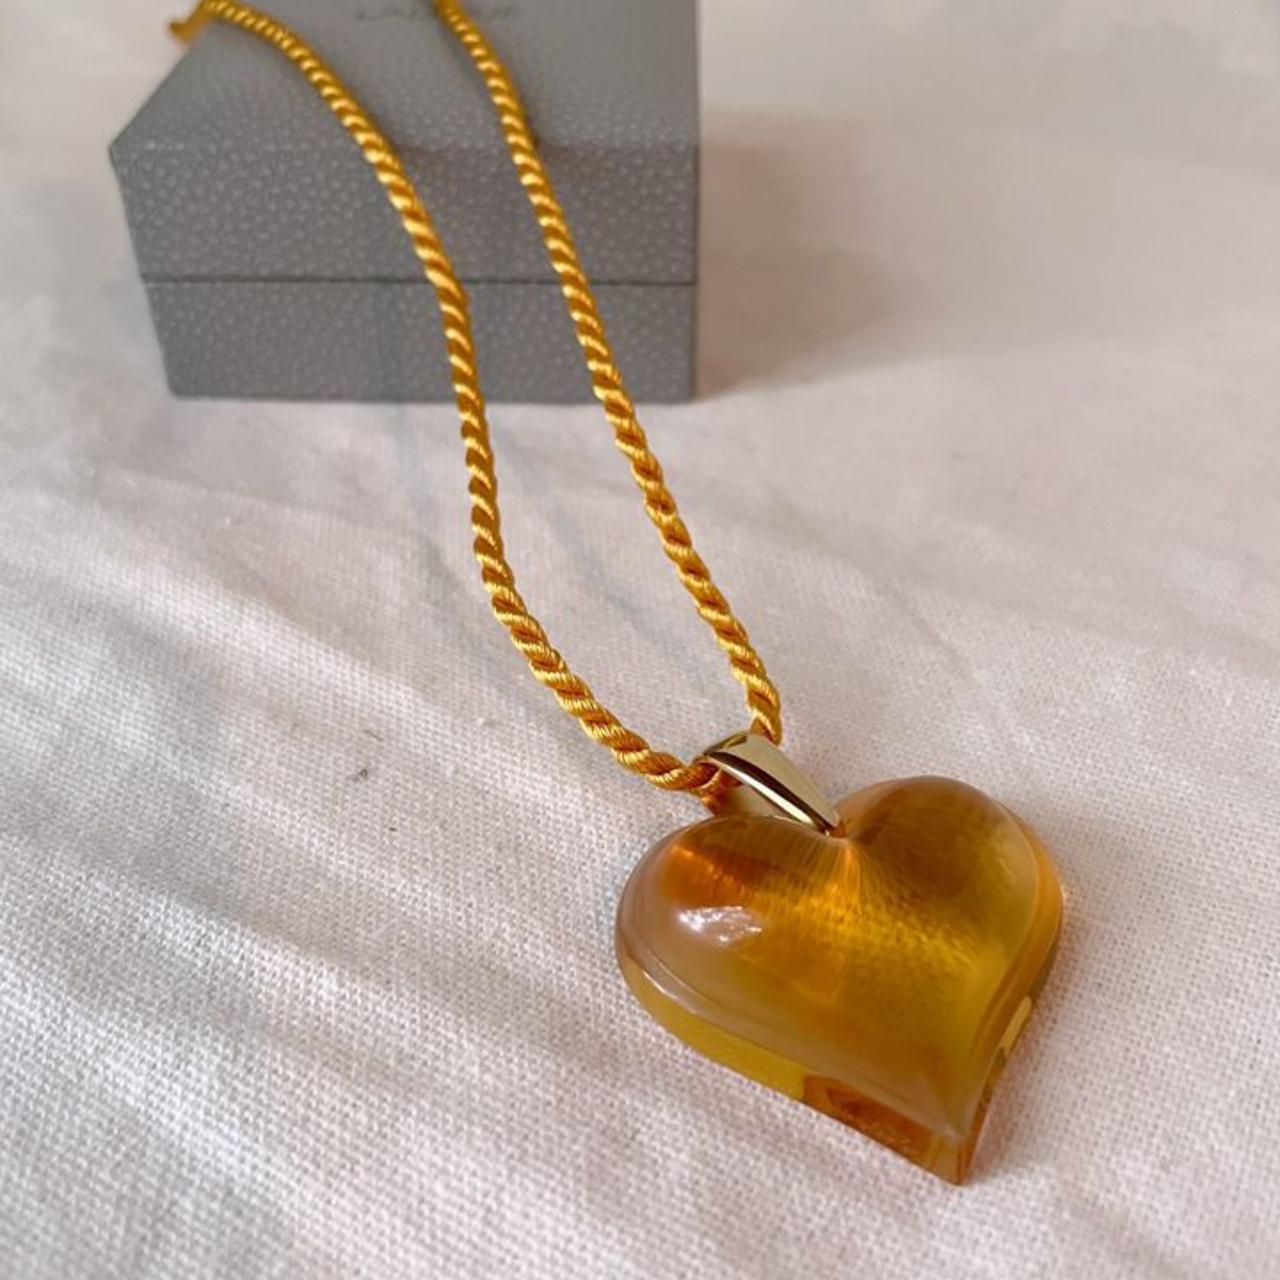 Product Image 2 - MAKE OFFER NIB Lalique Amber